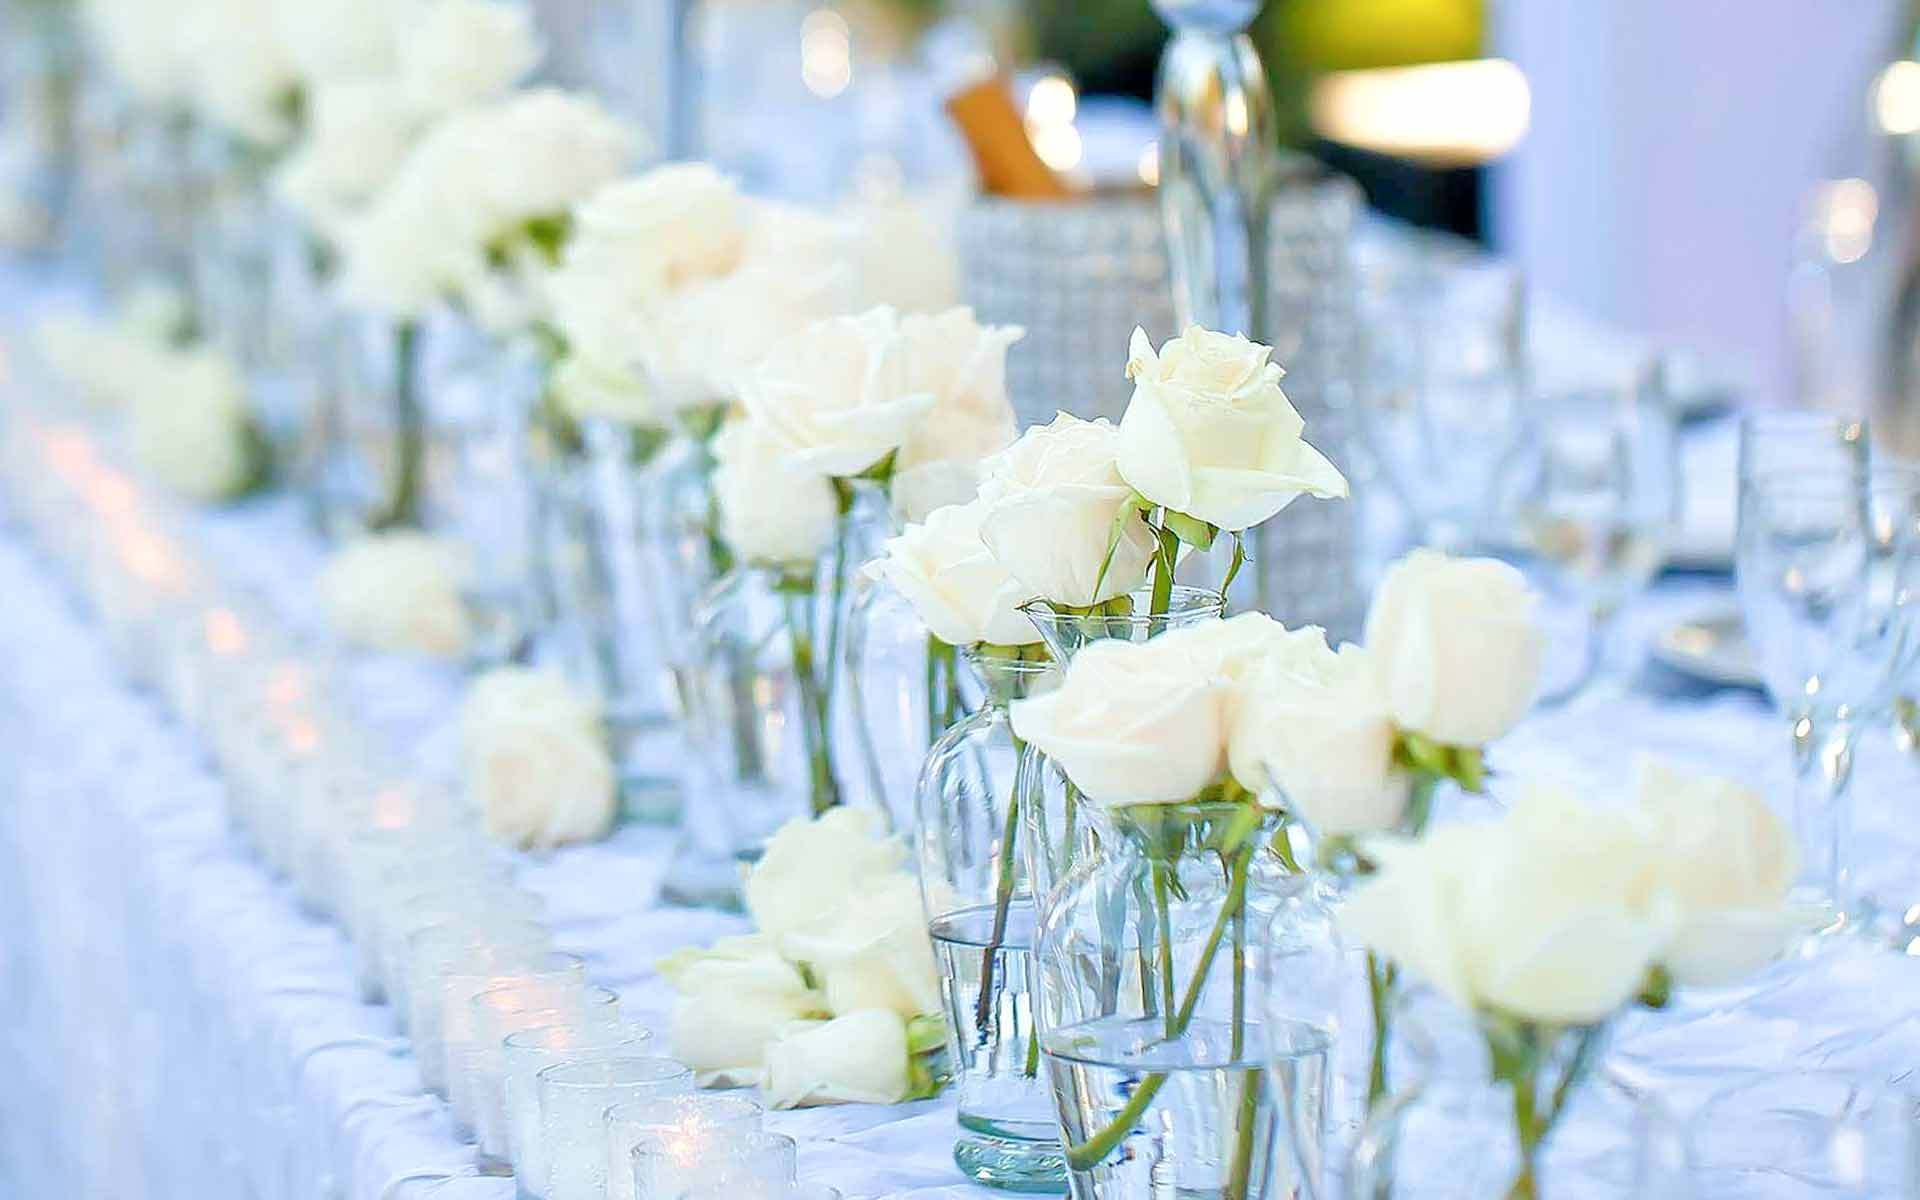 Simplicity & Elegance In A Wedding Reception Table